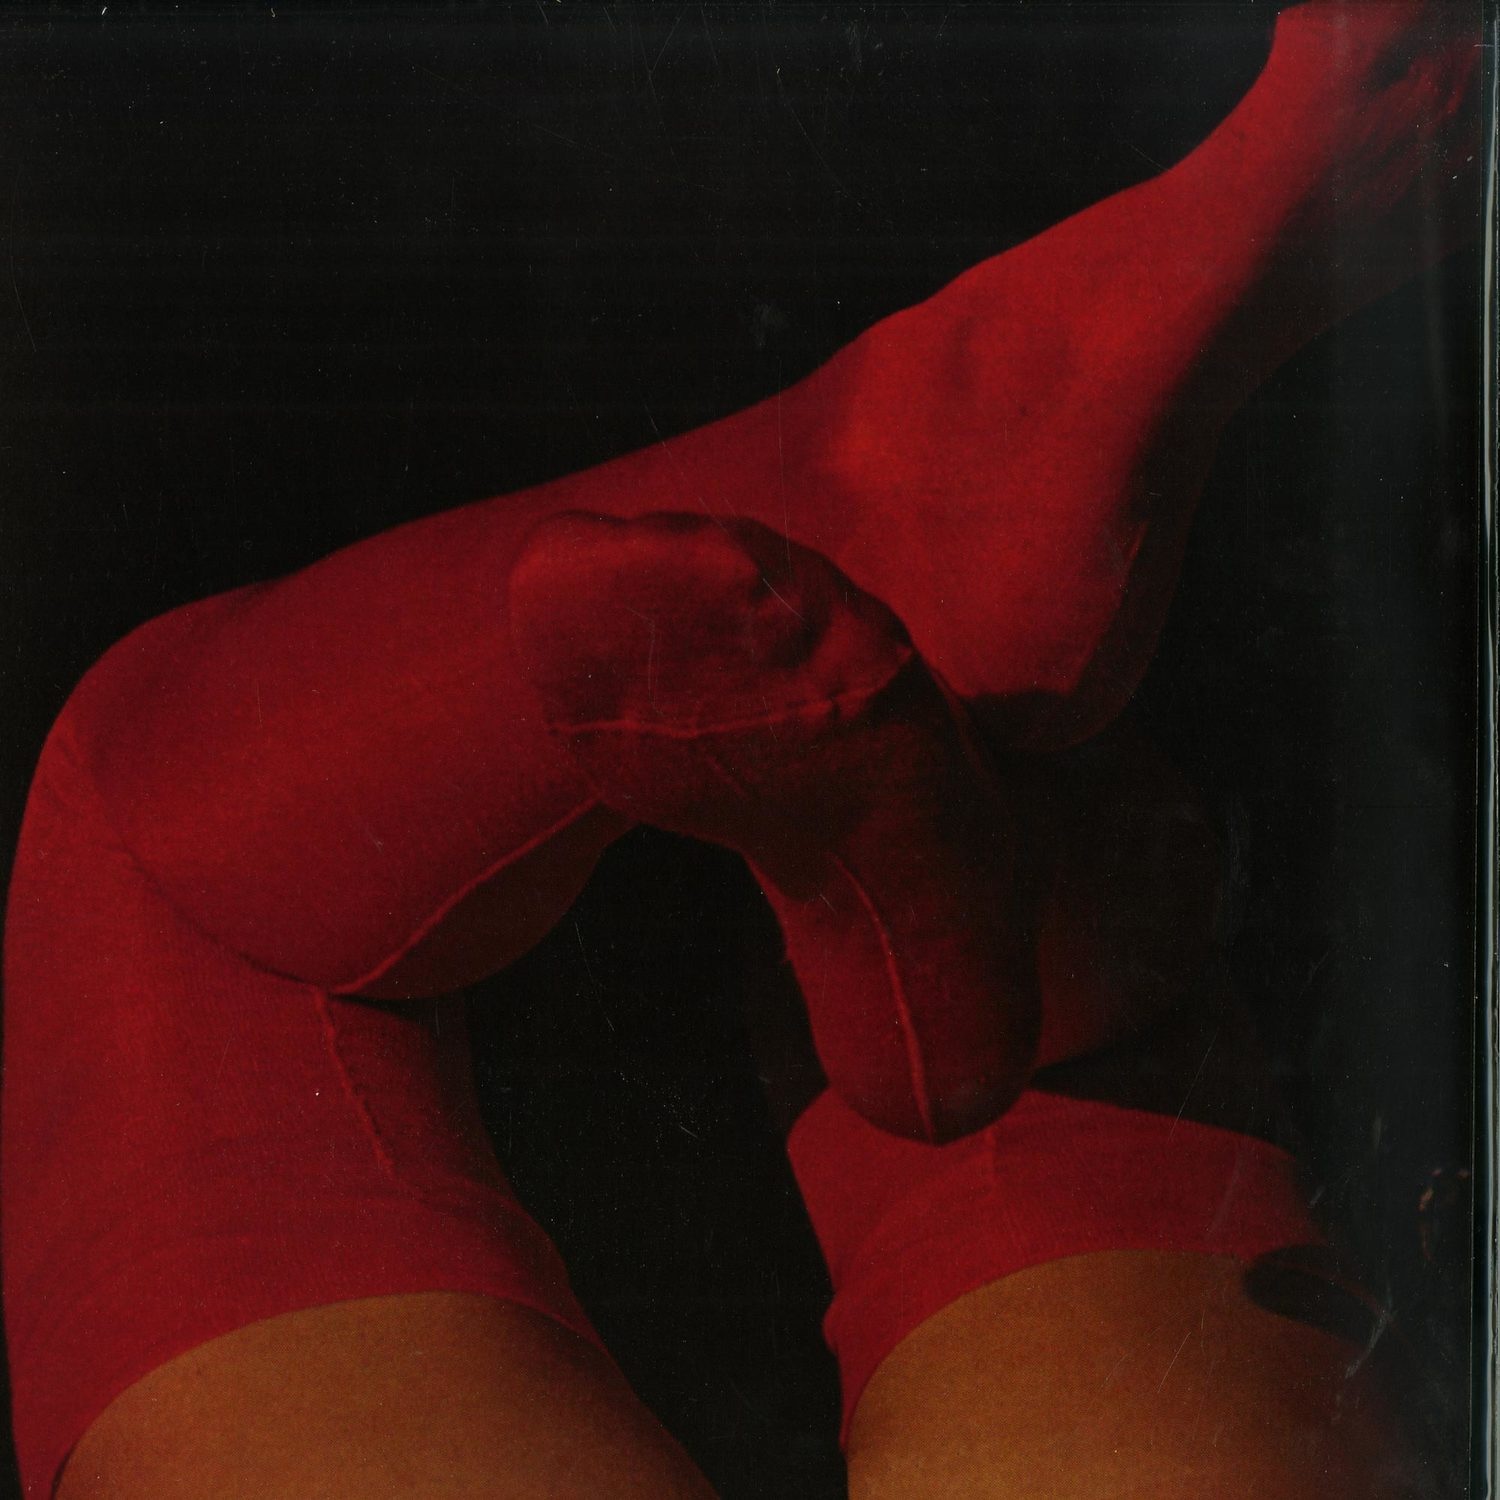 HanChi - The Fabulous Pain vinyl cover